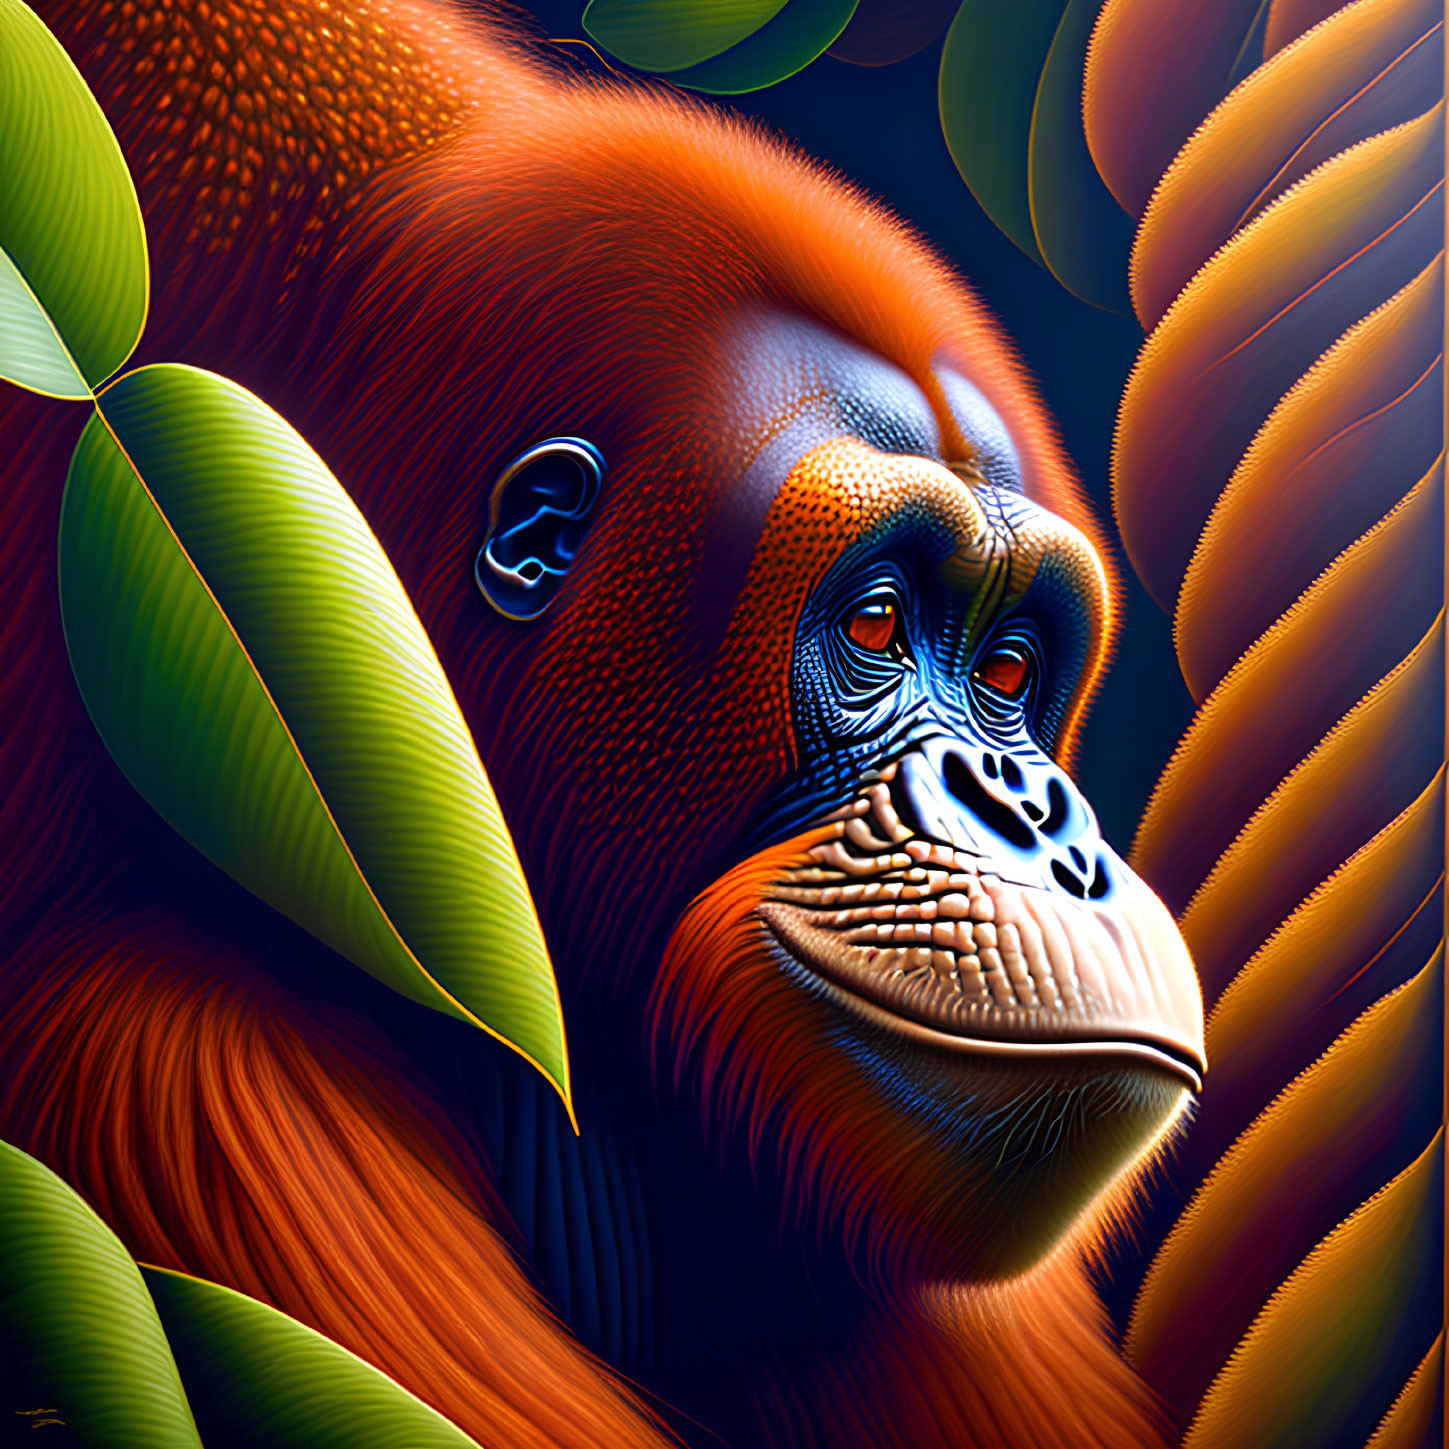 Colorful digital artwork: Orangutan with orange fur, green leaves, golden patterns